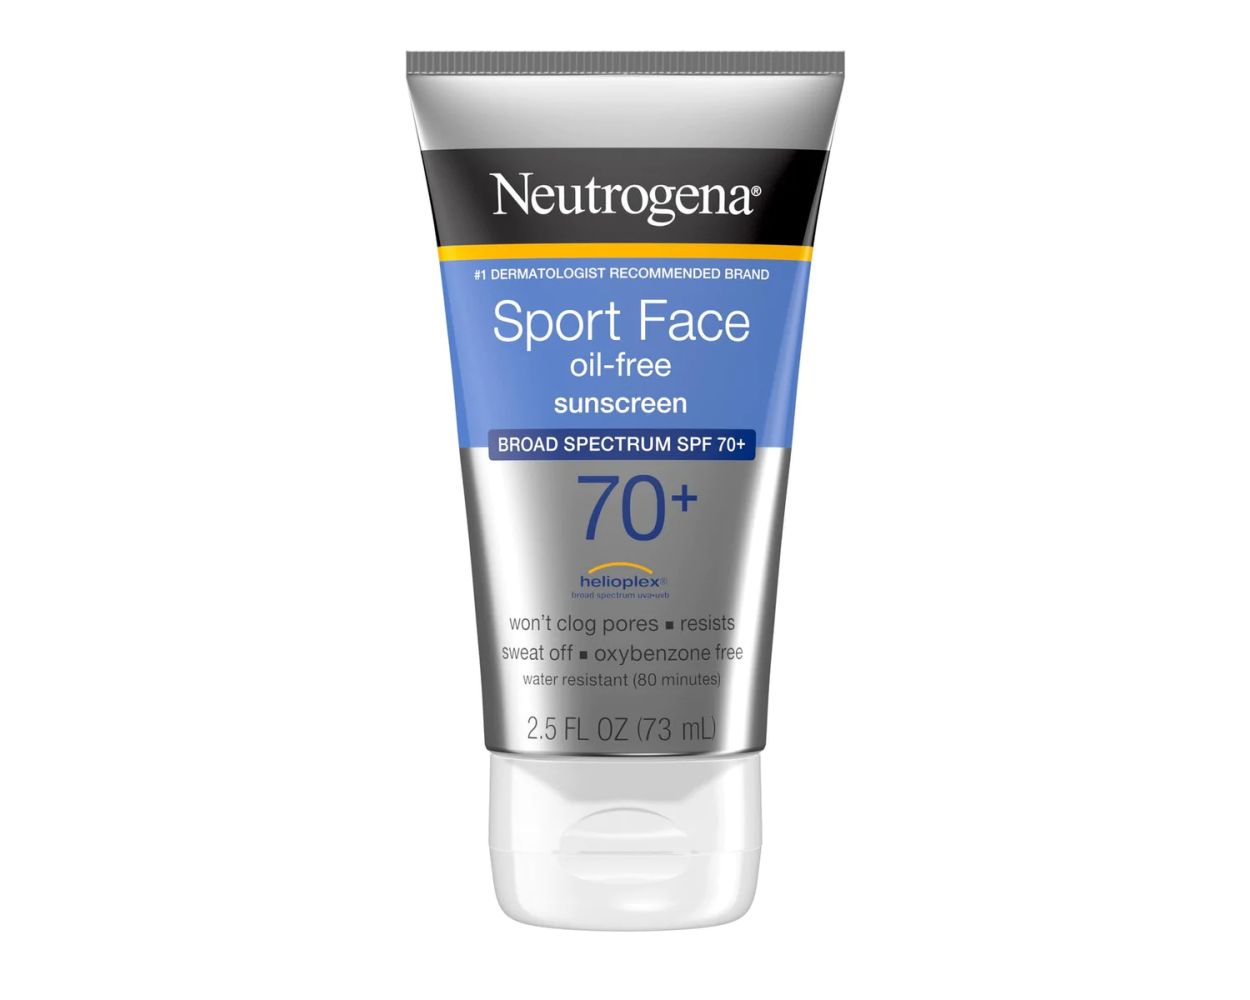 Neutrogena Sunscreen Sport Face Lotion SPF 70+ 73Ml - AllurebeautypkNeutrogena Sunscreen Sport Face Lotion SPF 70+ 73Ml